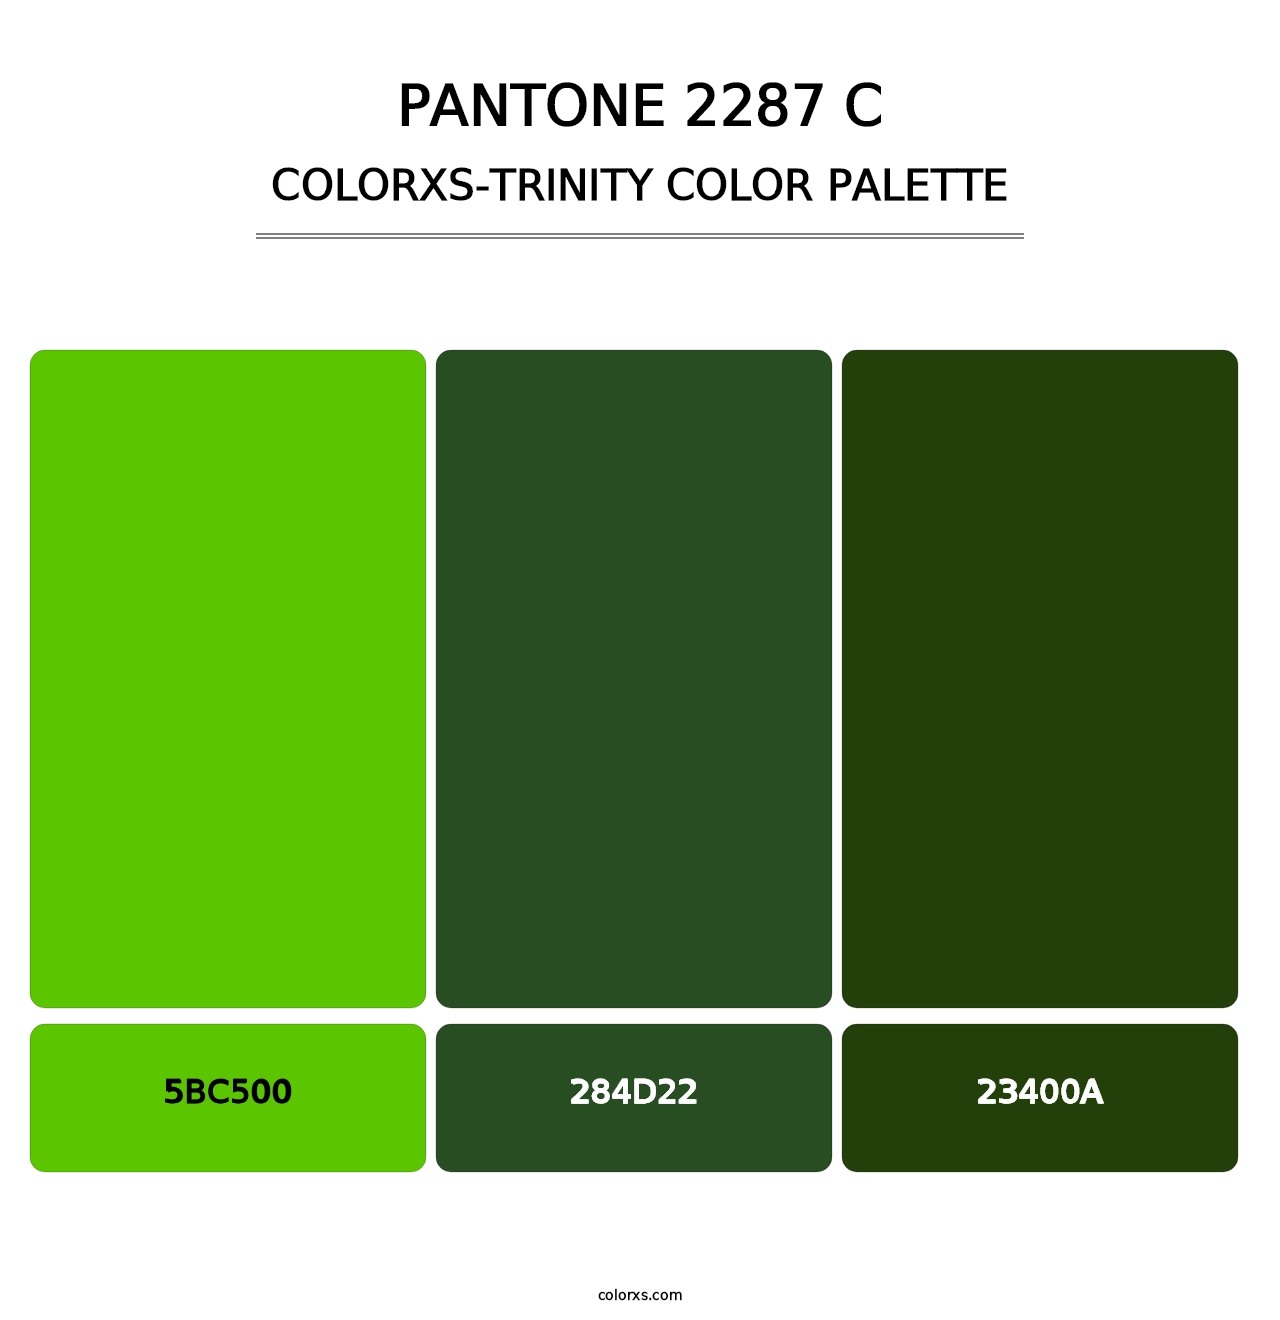 PANTONE 2287 C - Colorxs Trinity Palette